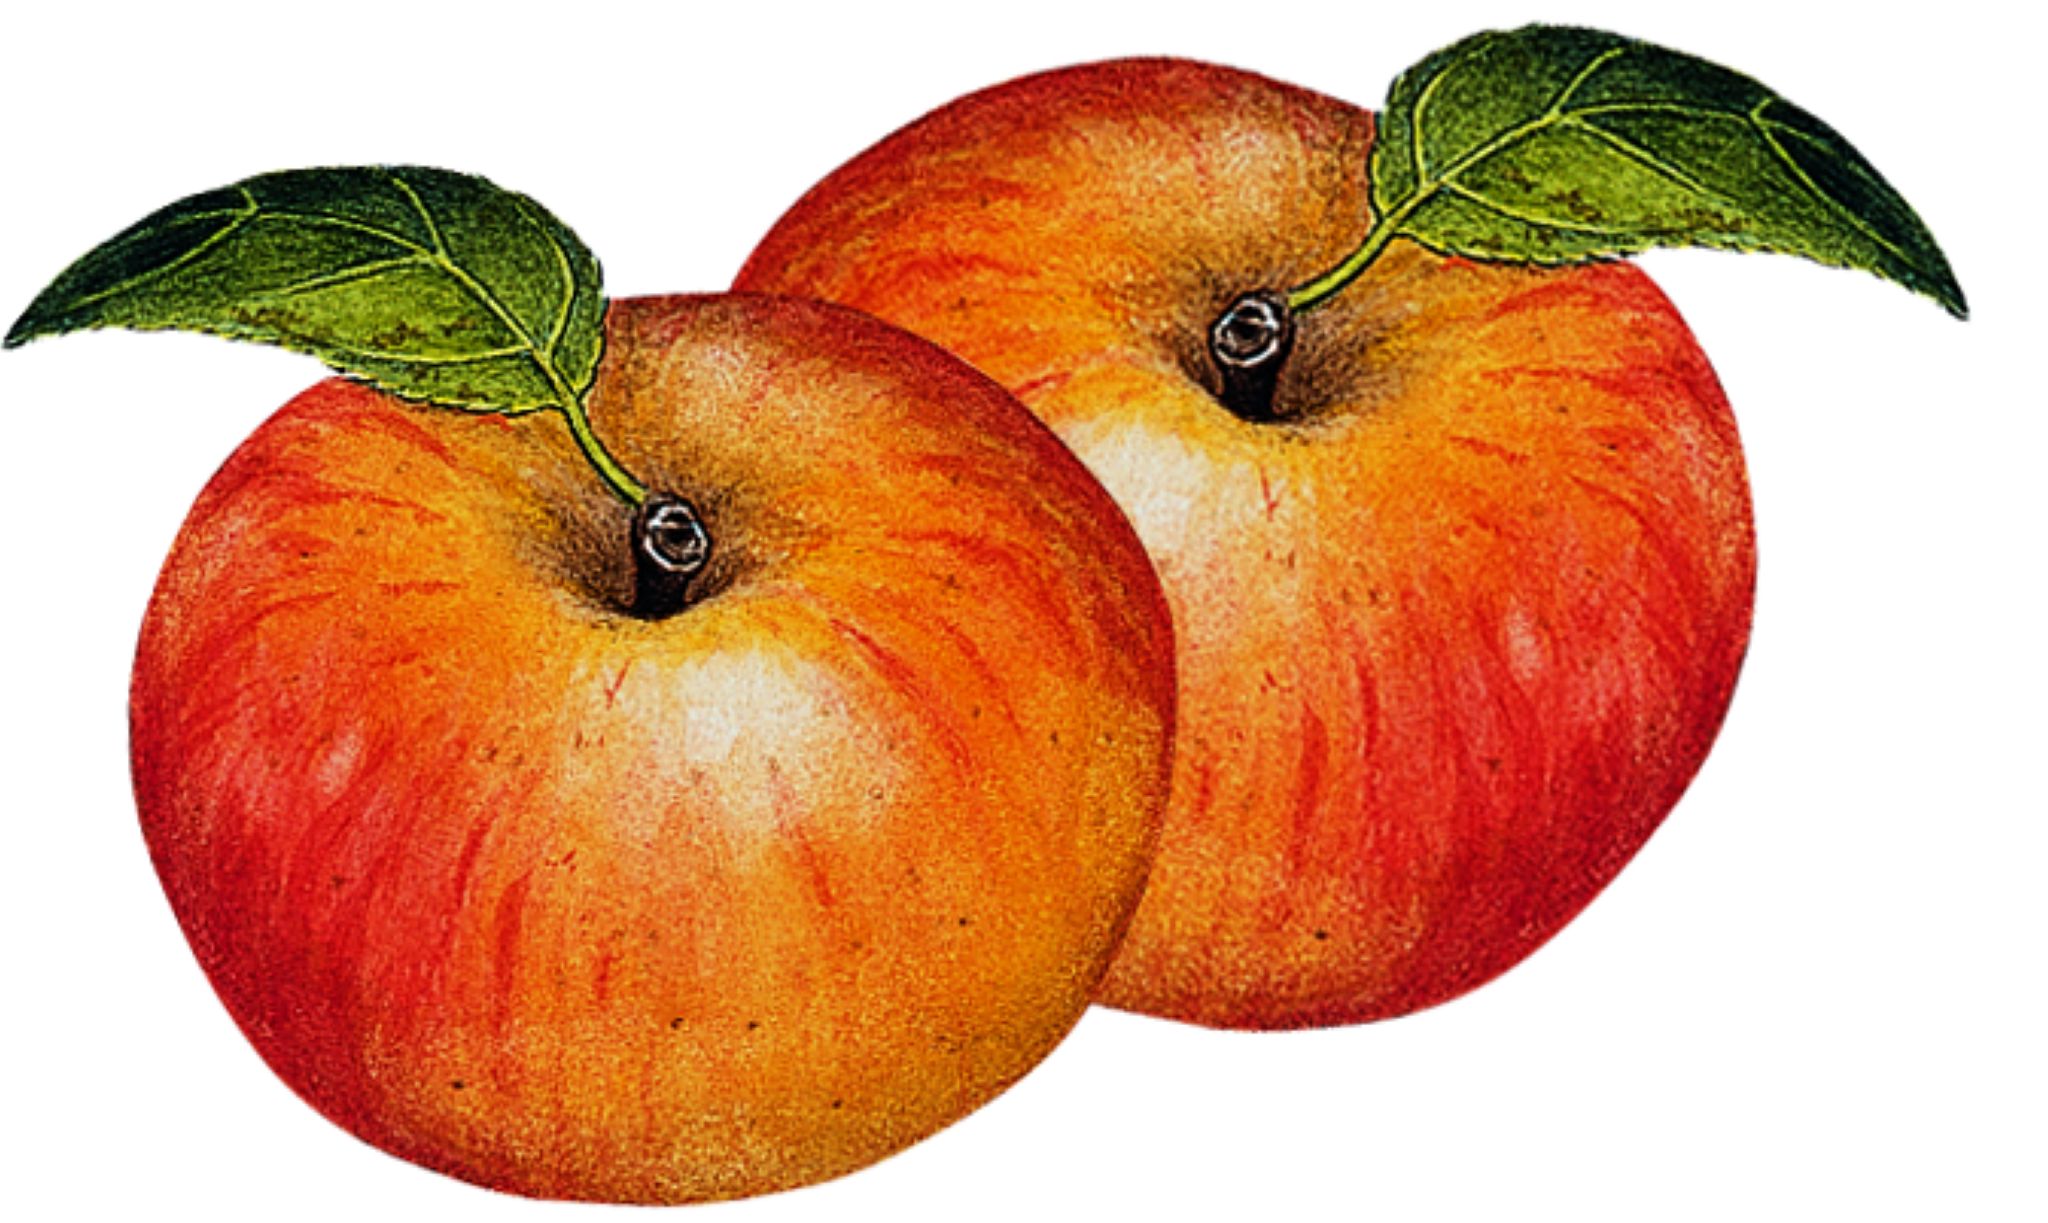 des pommes reinettes